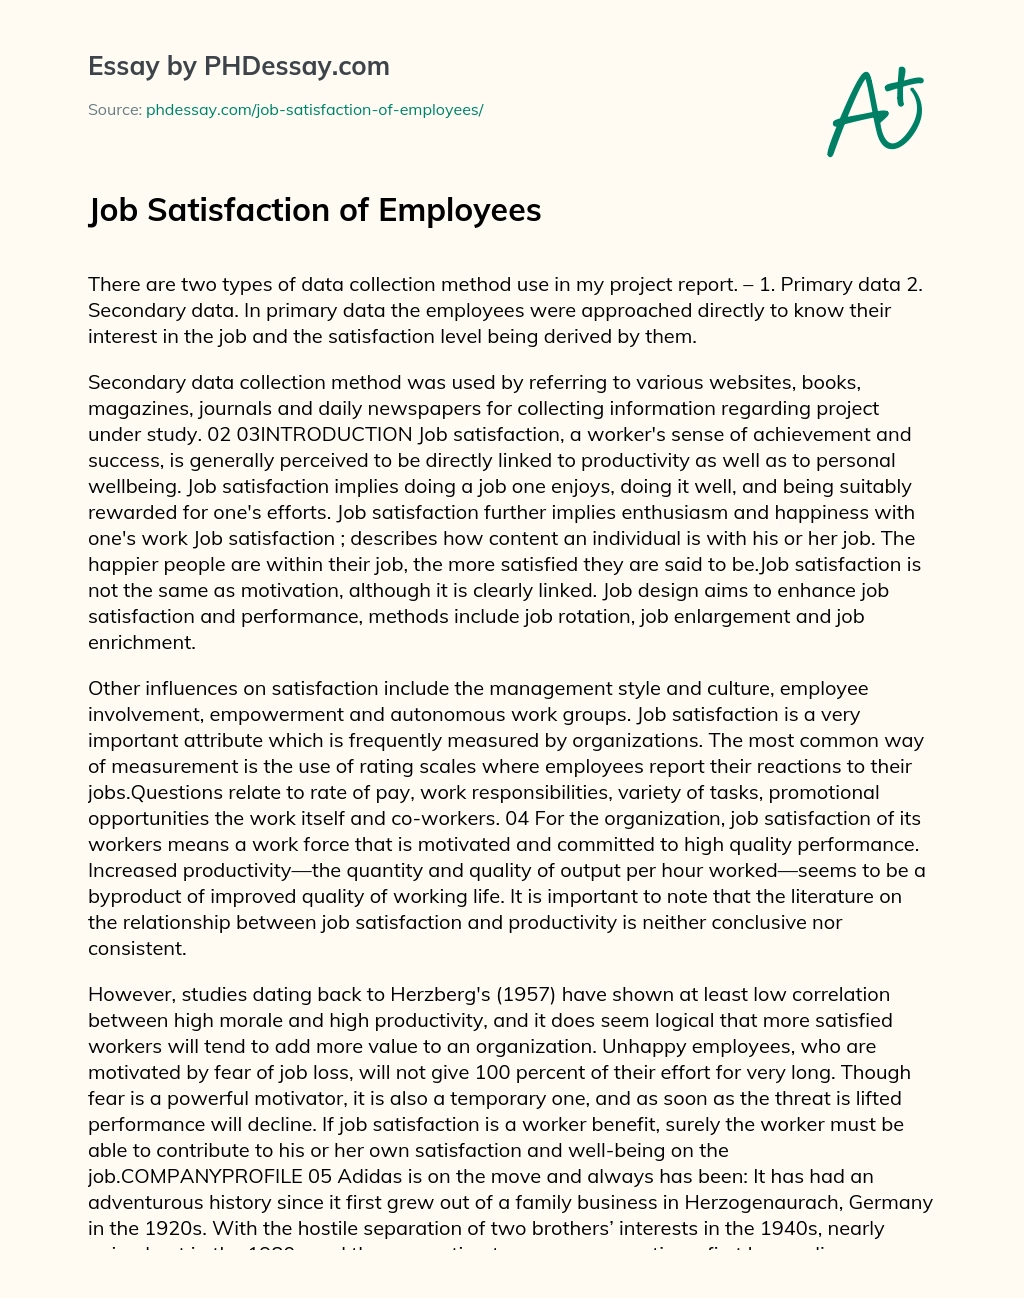 Job Satisfaction of Employees essay